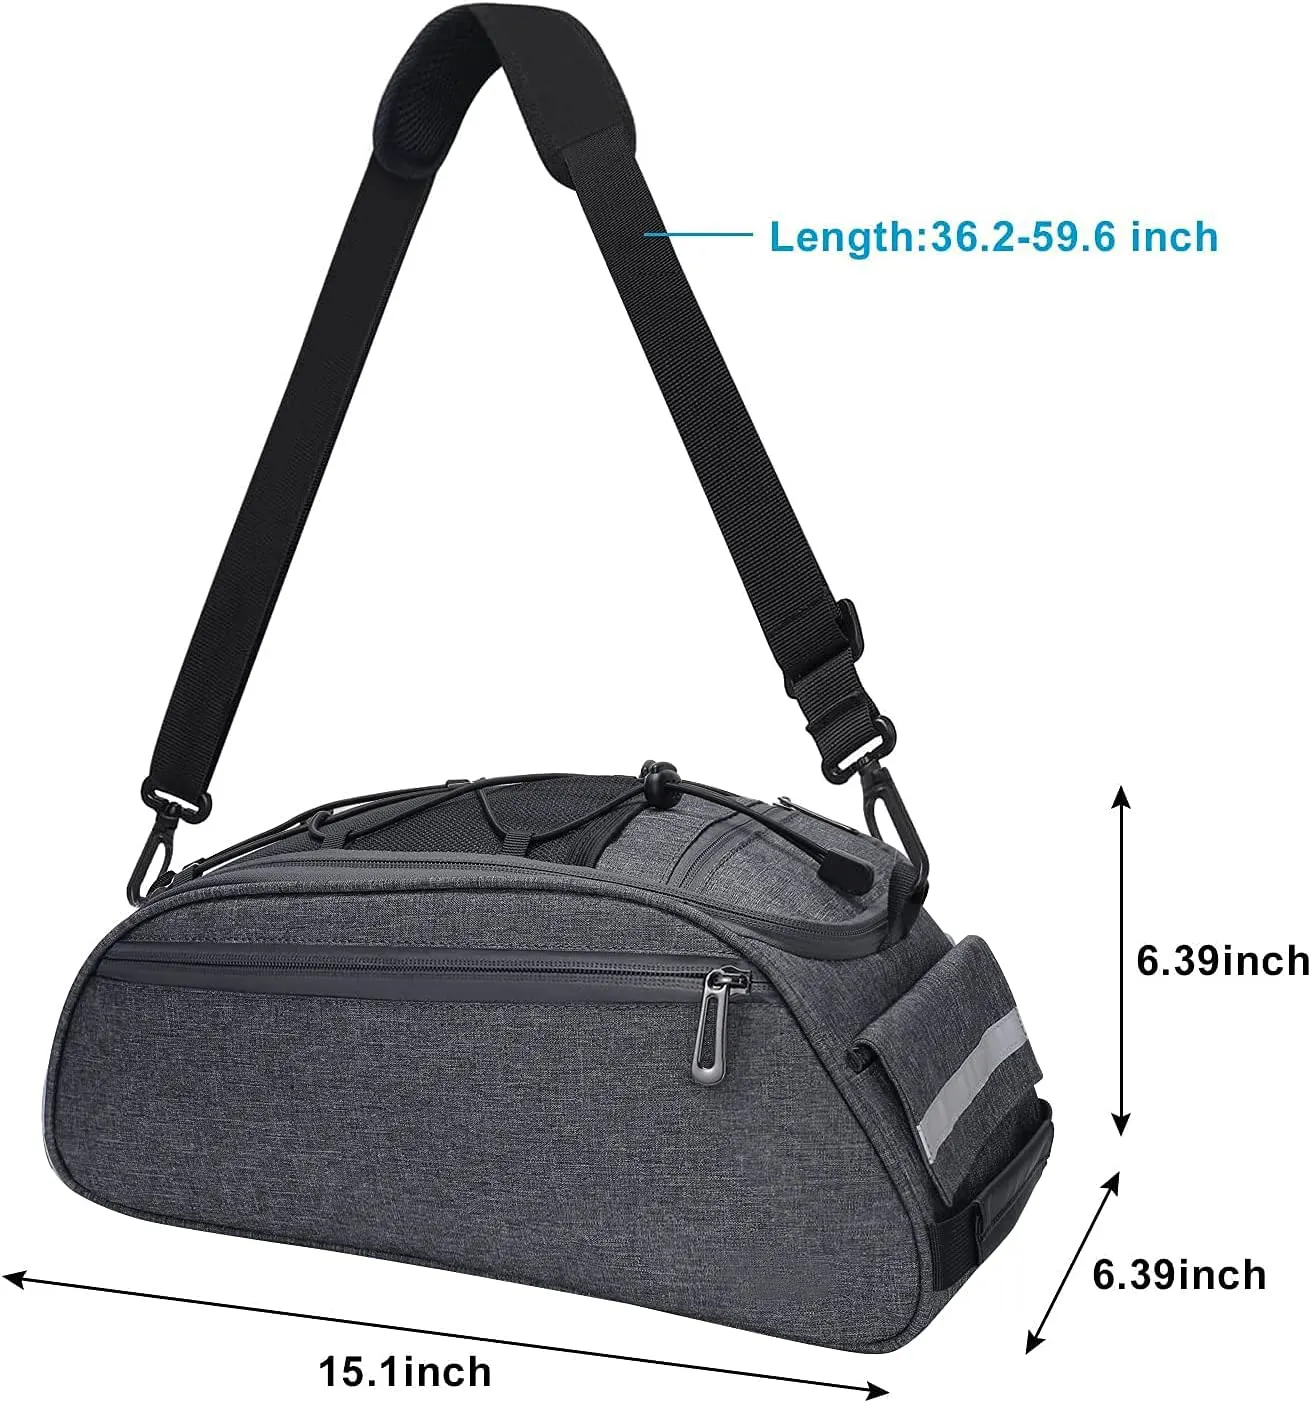 Bolsa de almacenamiento impermeable para bicicleta, bolsa de asiento trasero triangular con correa reflectante, resistente al agua